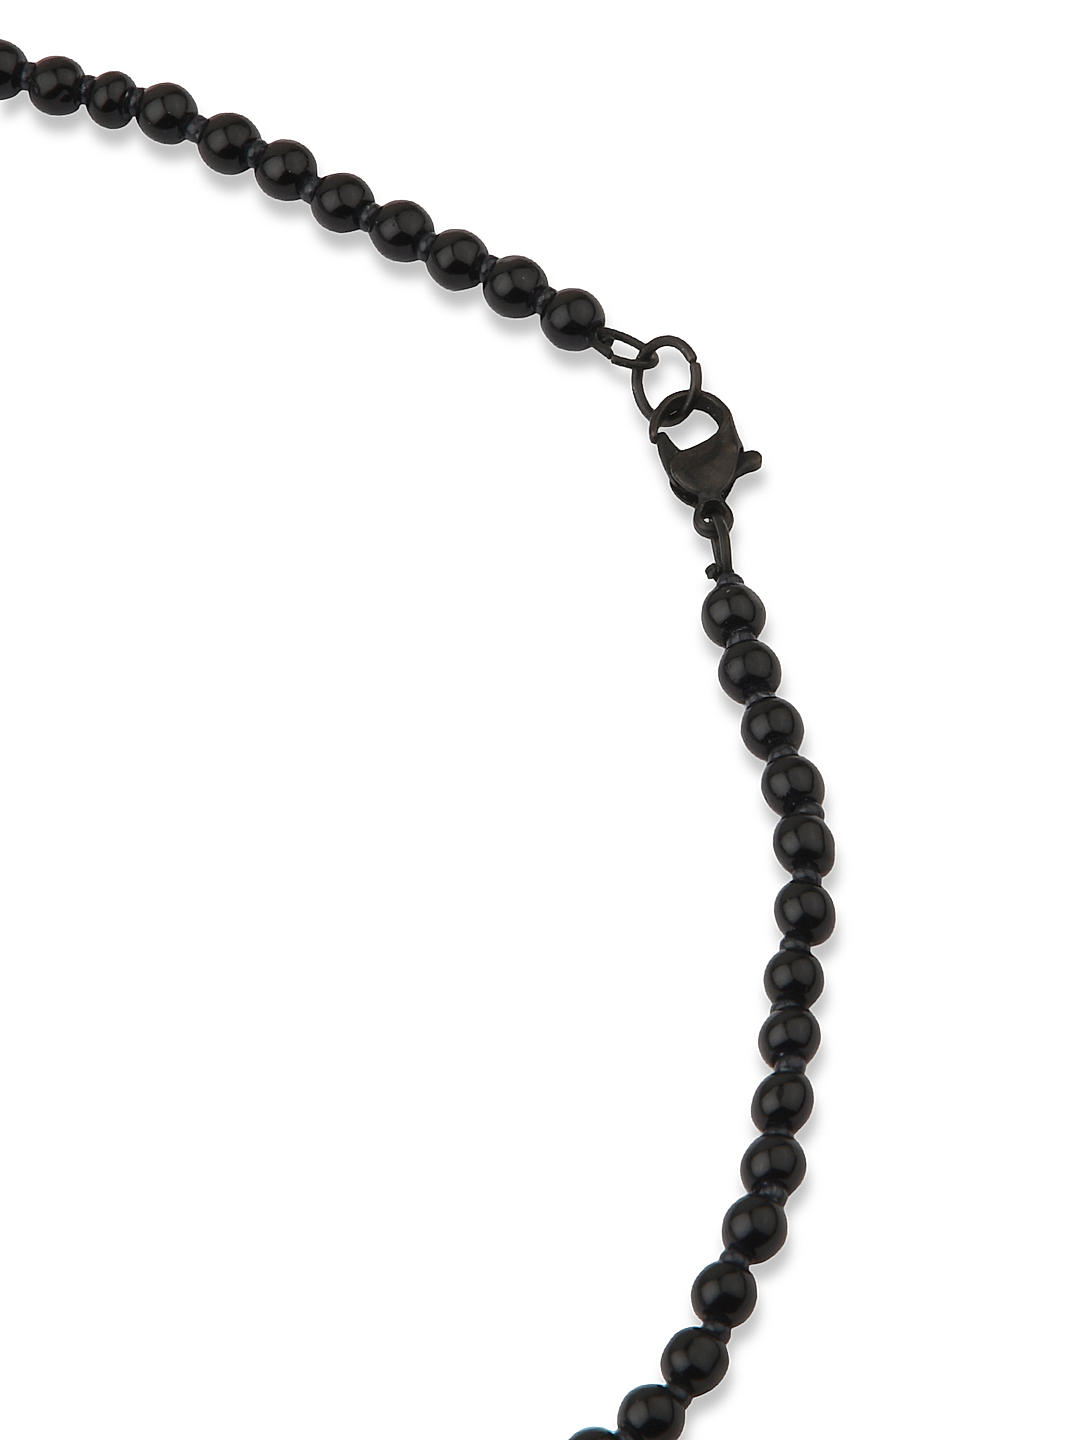 Antique Silver and Black Bead Cross Pendant Necklace | Cross pendant  necklace, Fashion accessories jewelry, Antique pendant